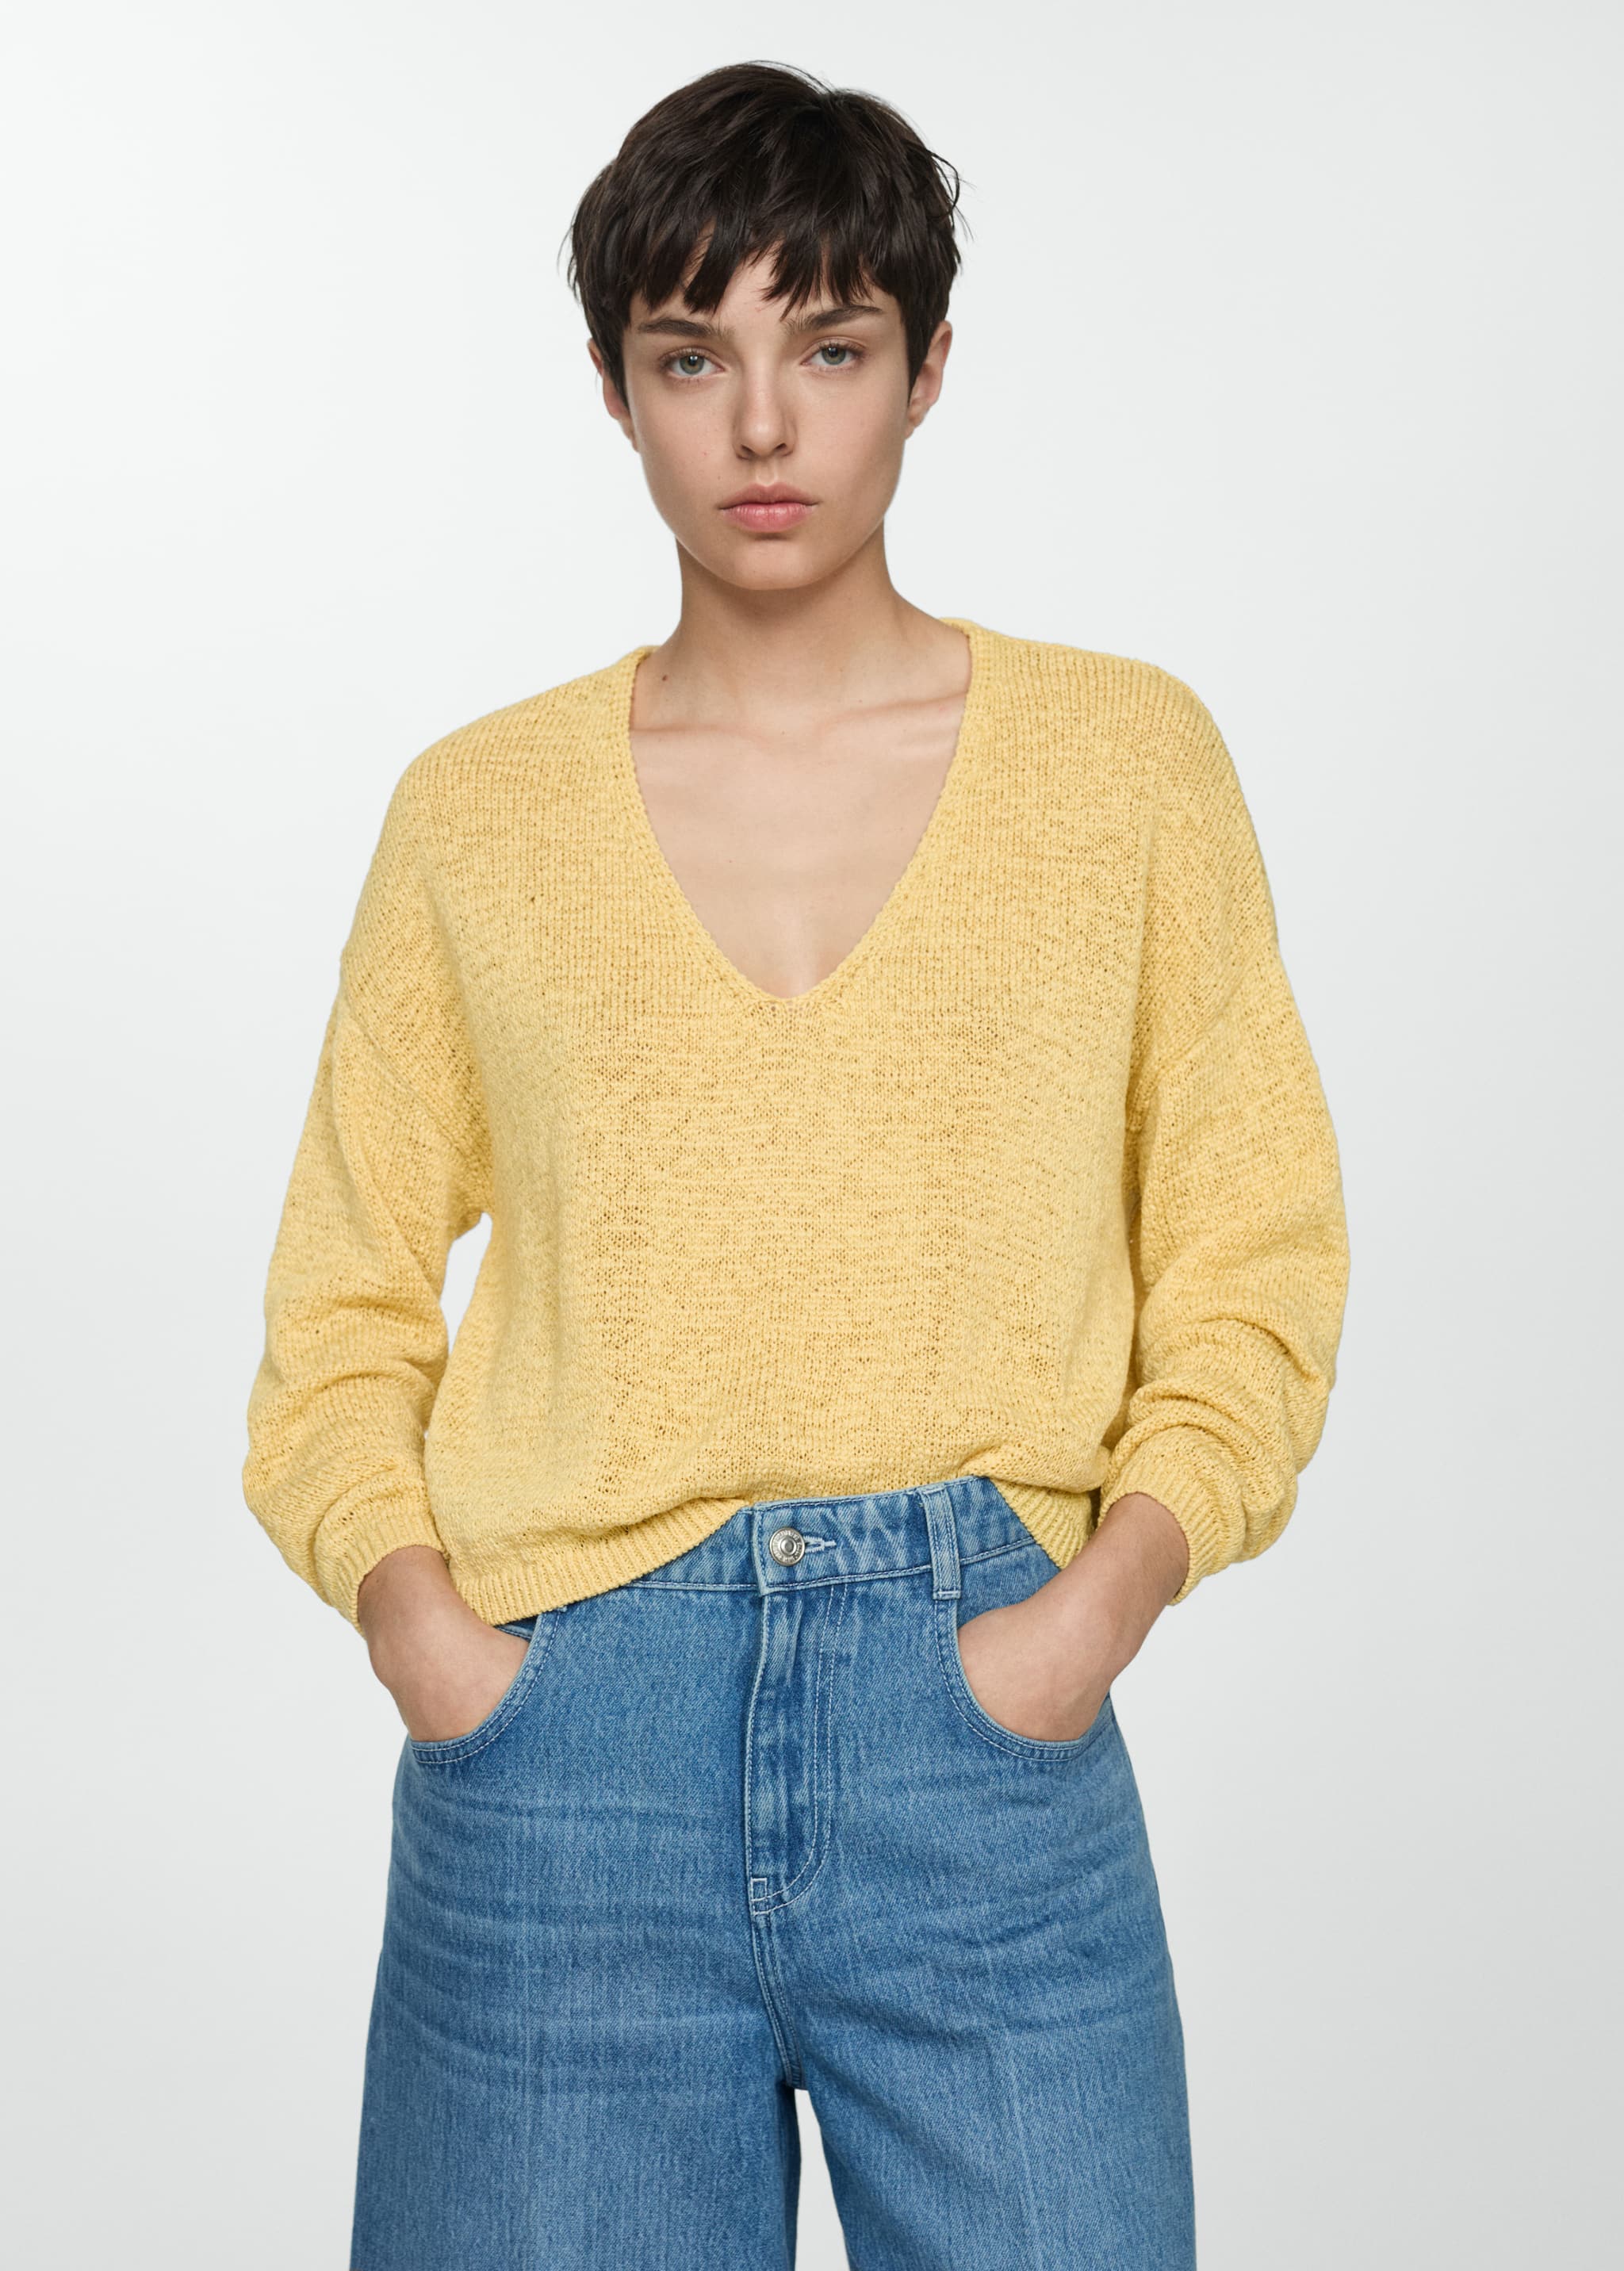 Fine-knit V-neck sweater - Medium plane